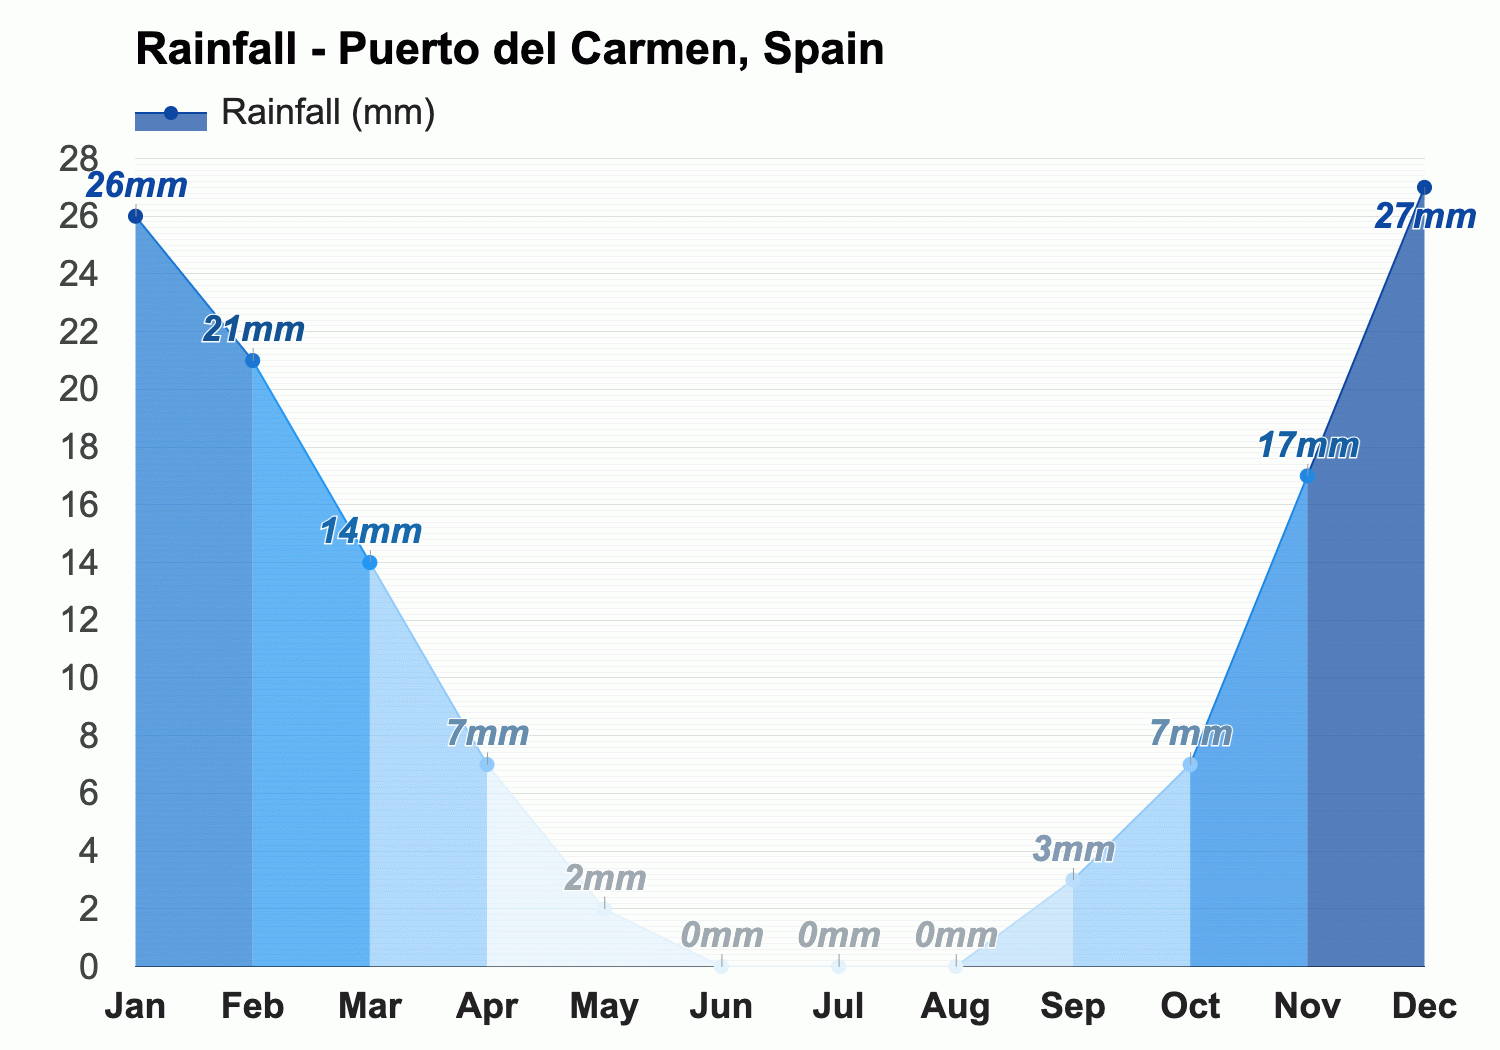 September Weather forecast - Autumn forecast - Puerto del Carmen, Spain